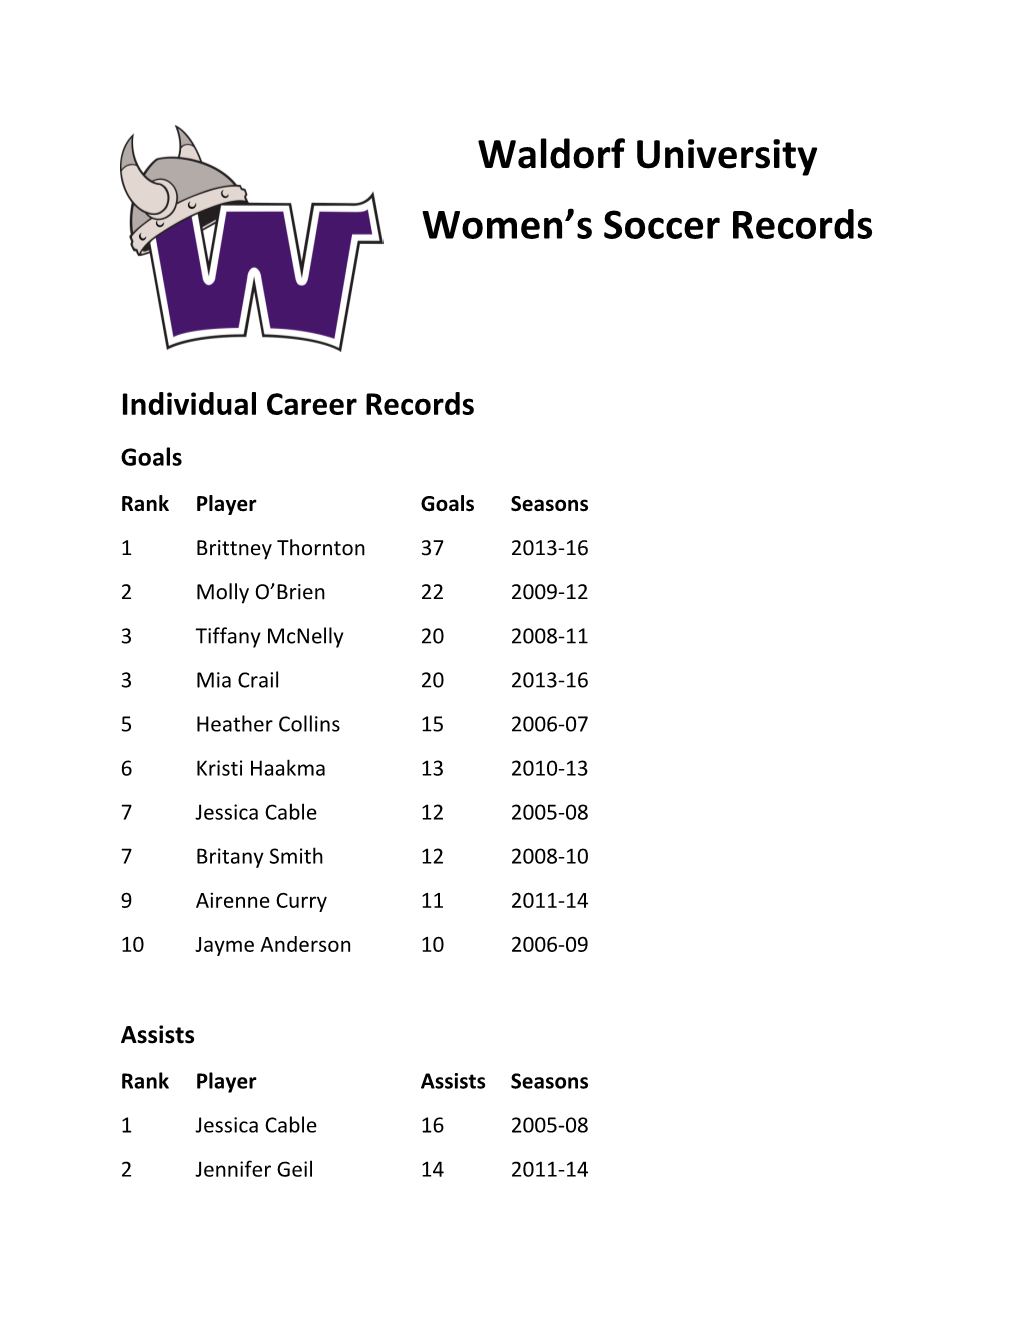 Waldorf University Women's Soccer Records